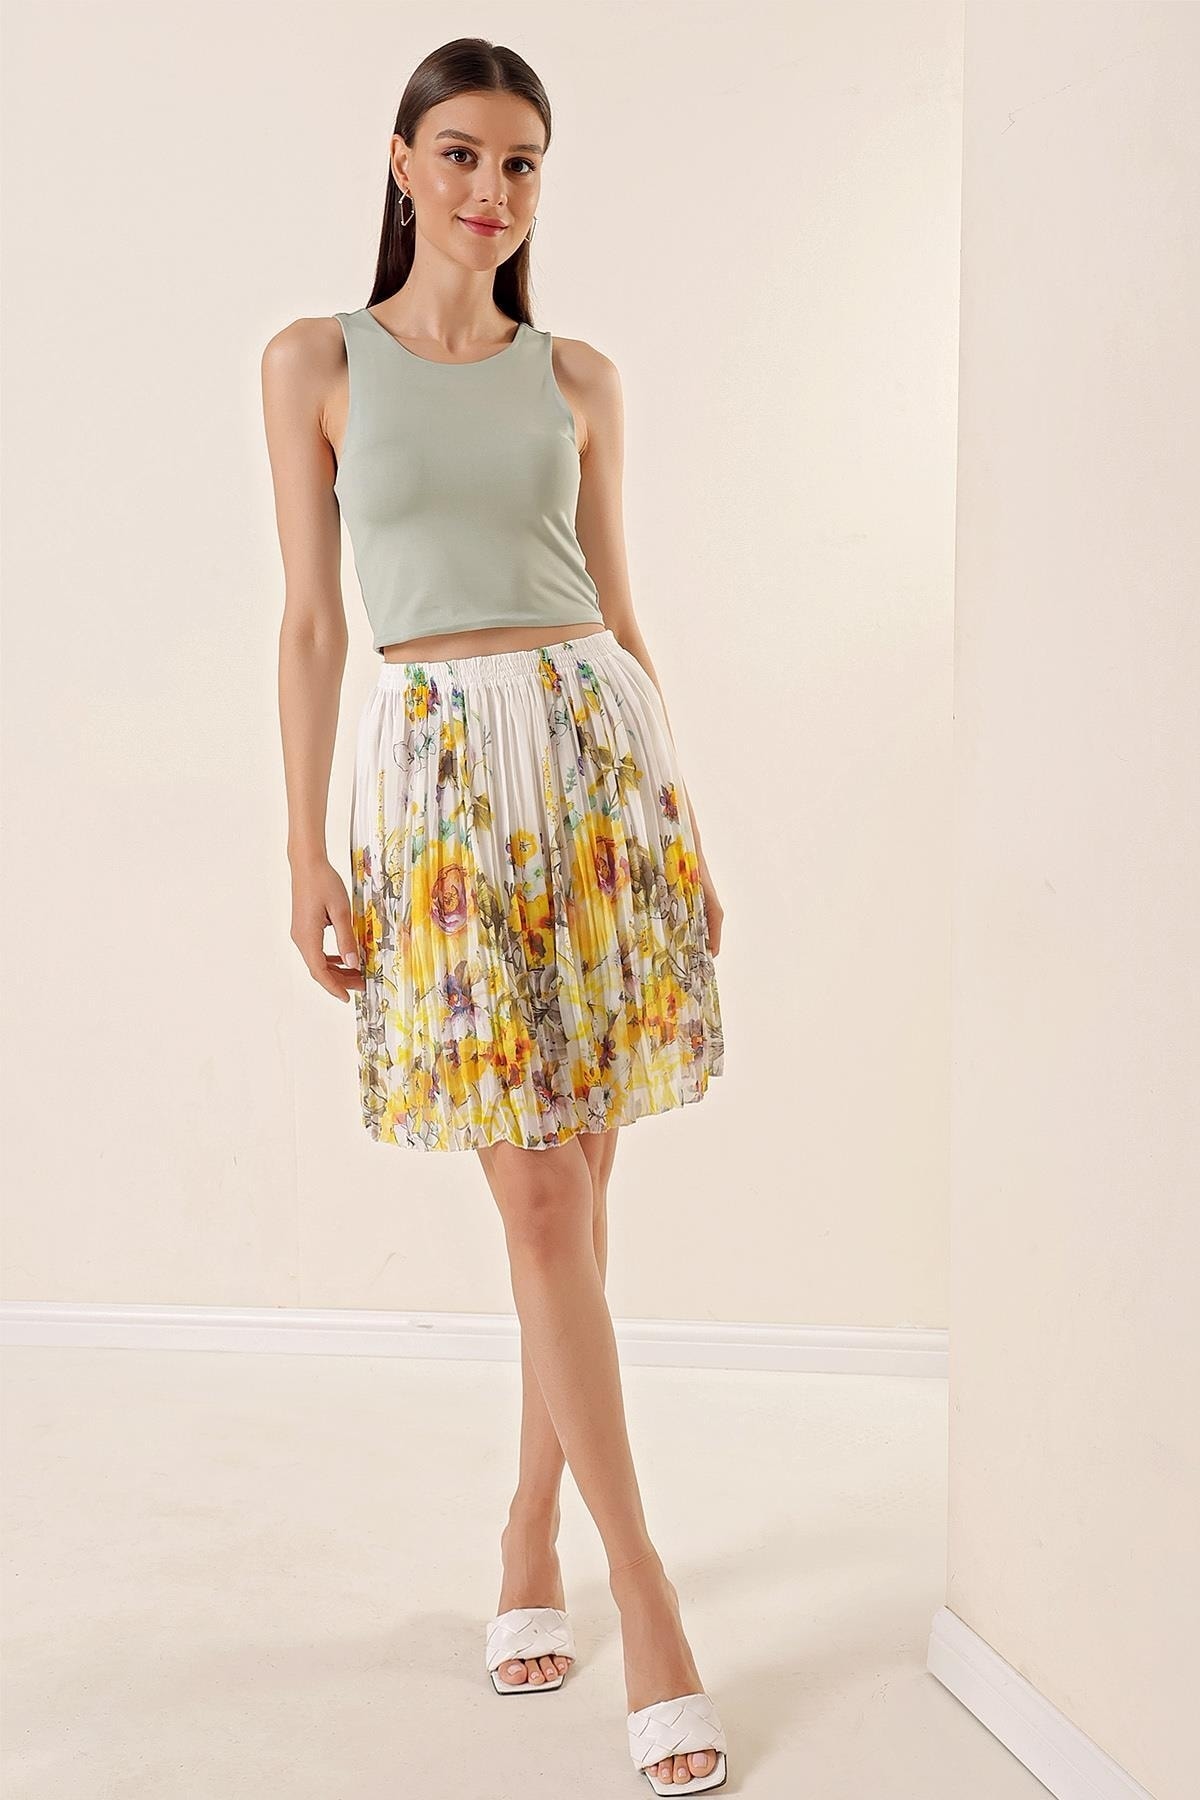 Levně By Saygı Elastic Waist Lined Large Flower Patterned Short Chiffon Skirt Yellow